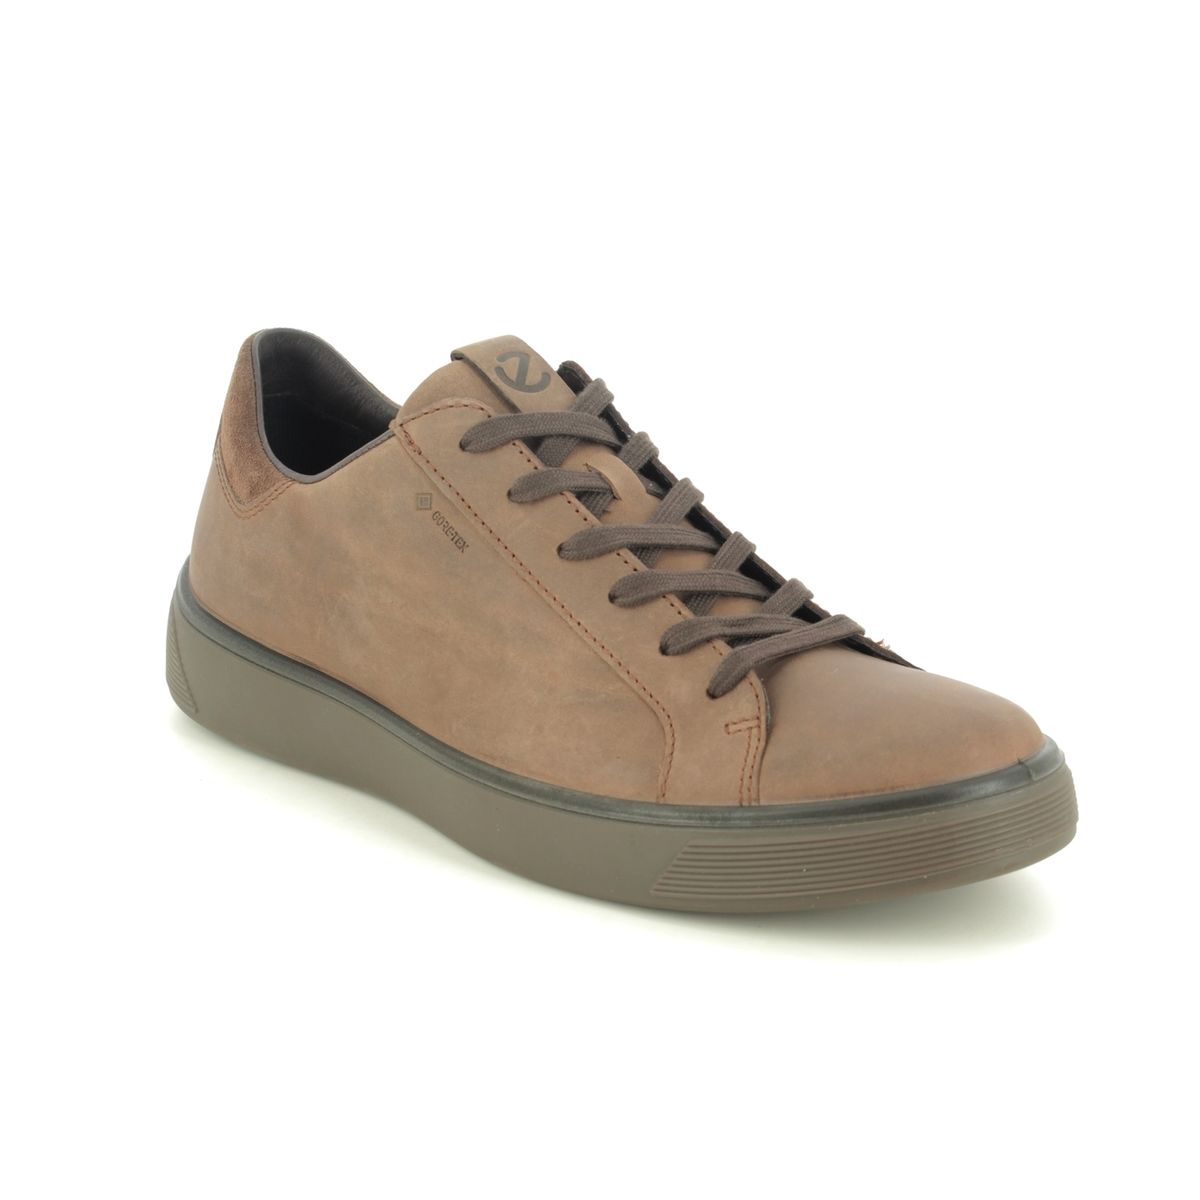 Ecco Street Tray Gtx Brown Nubuck Mens Comfort Shoes 504574-55778 In Size 46 In Plain Brown Nubuck